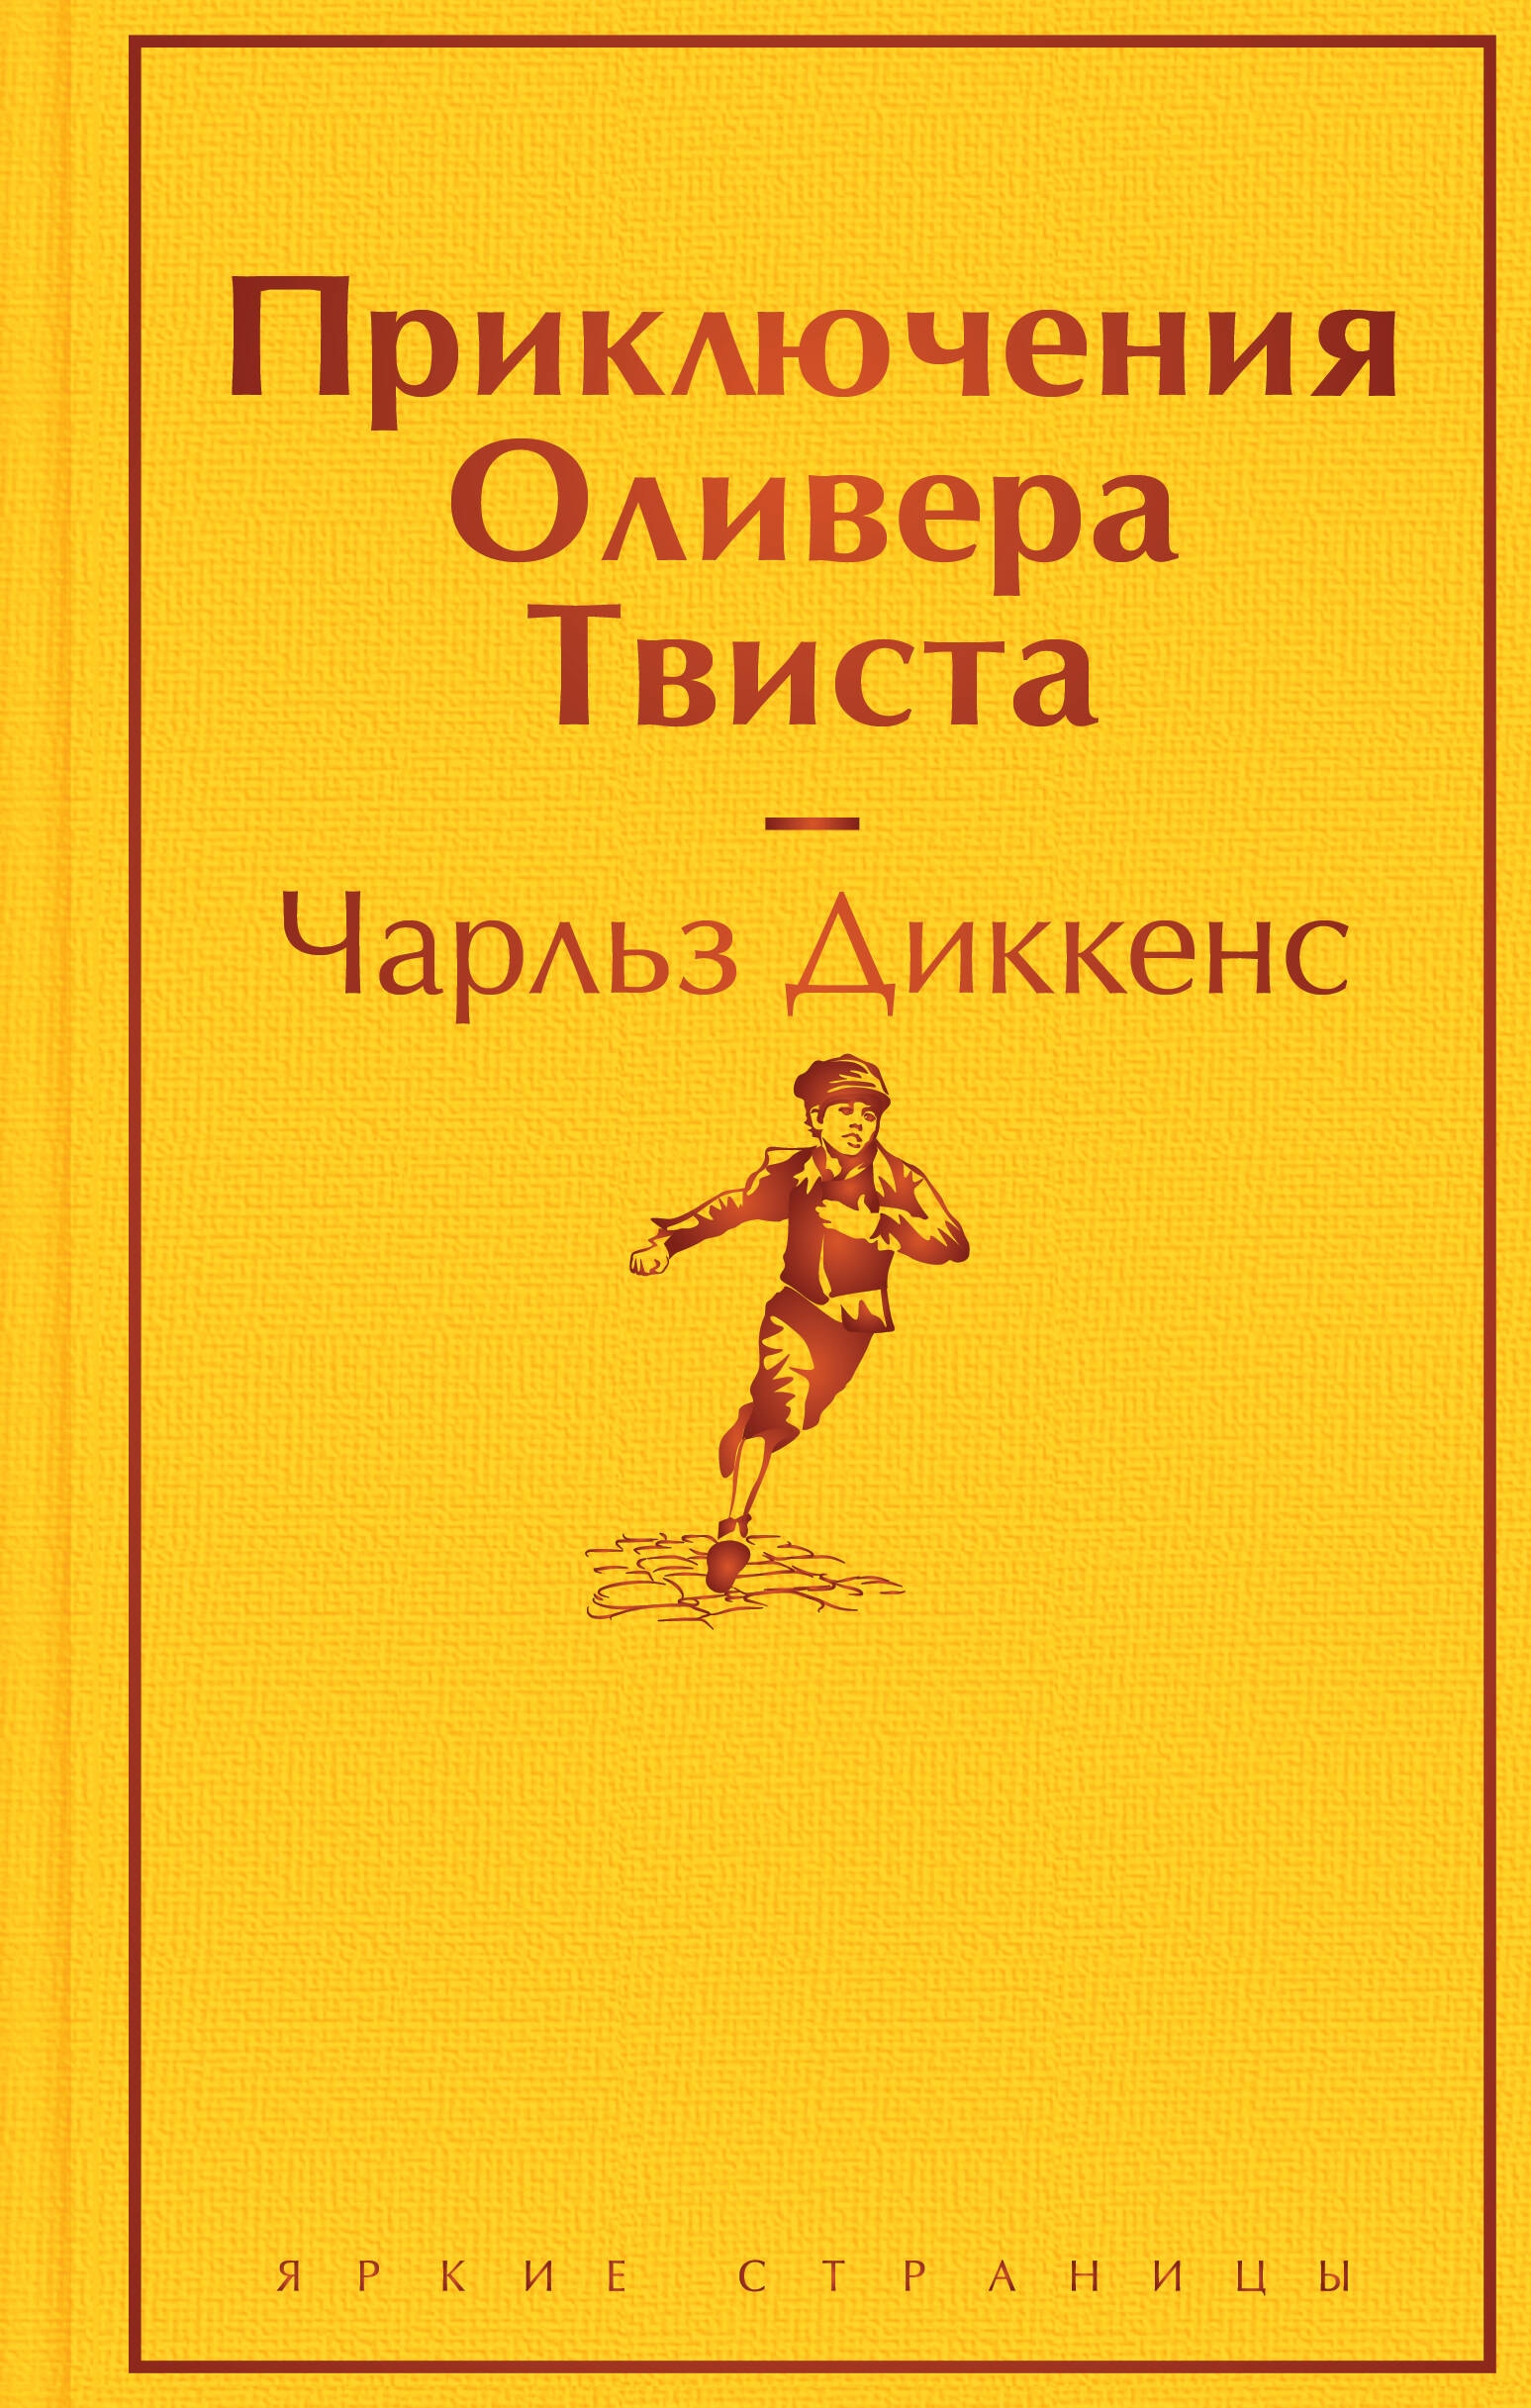 Book “Приключения Оливера Твиста” by Чарльз Диккенс — 2023